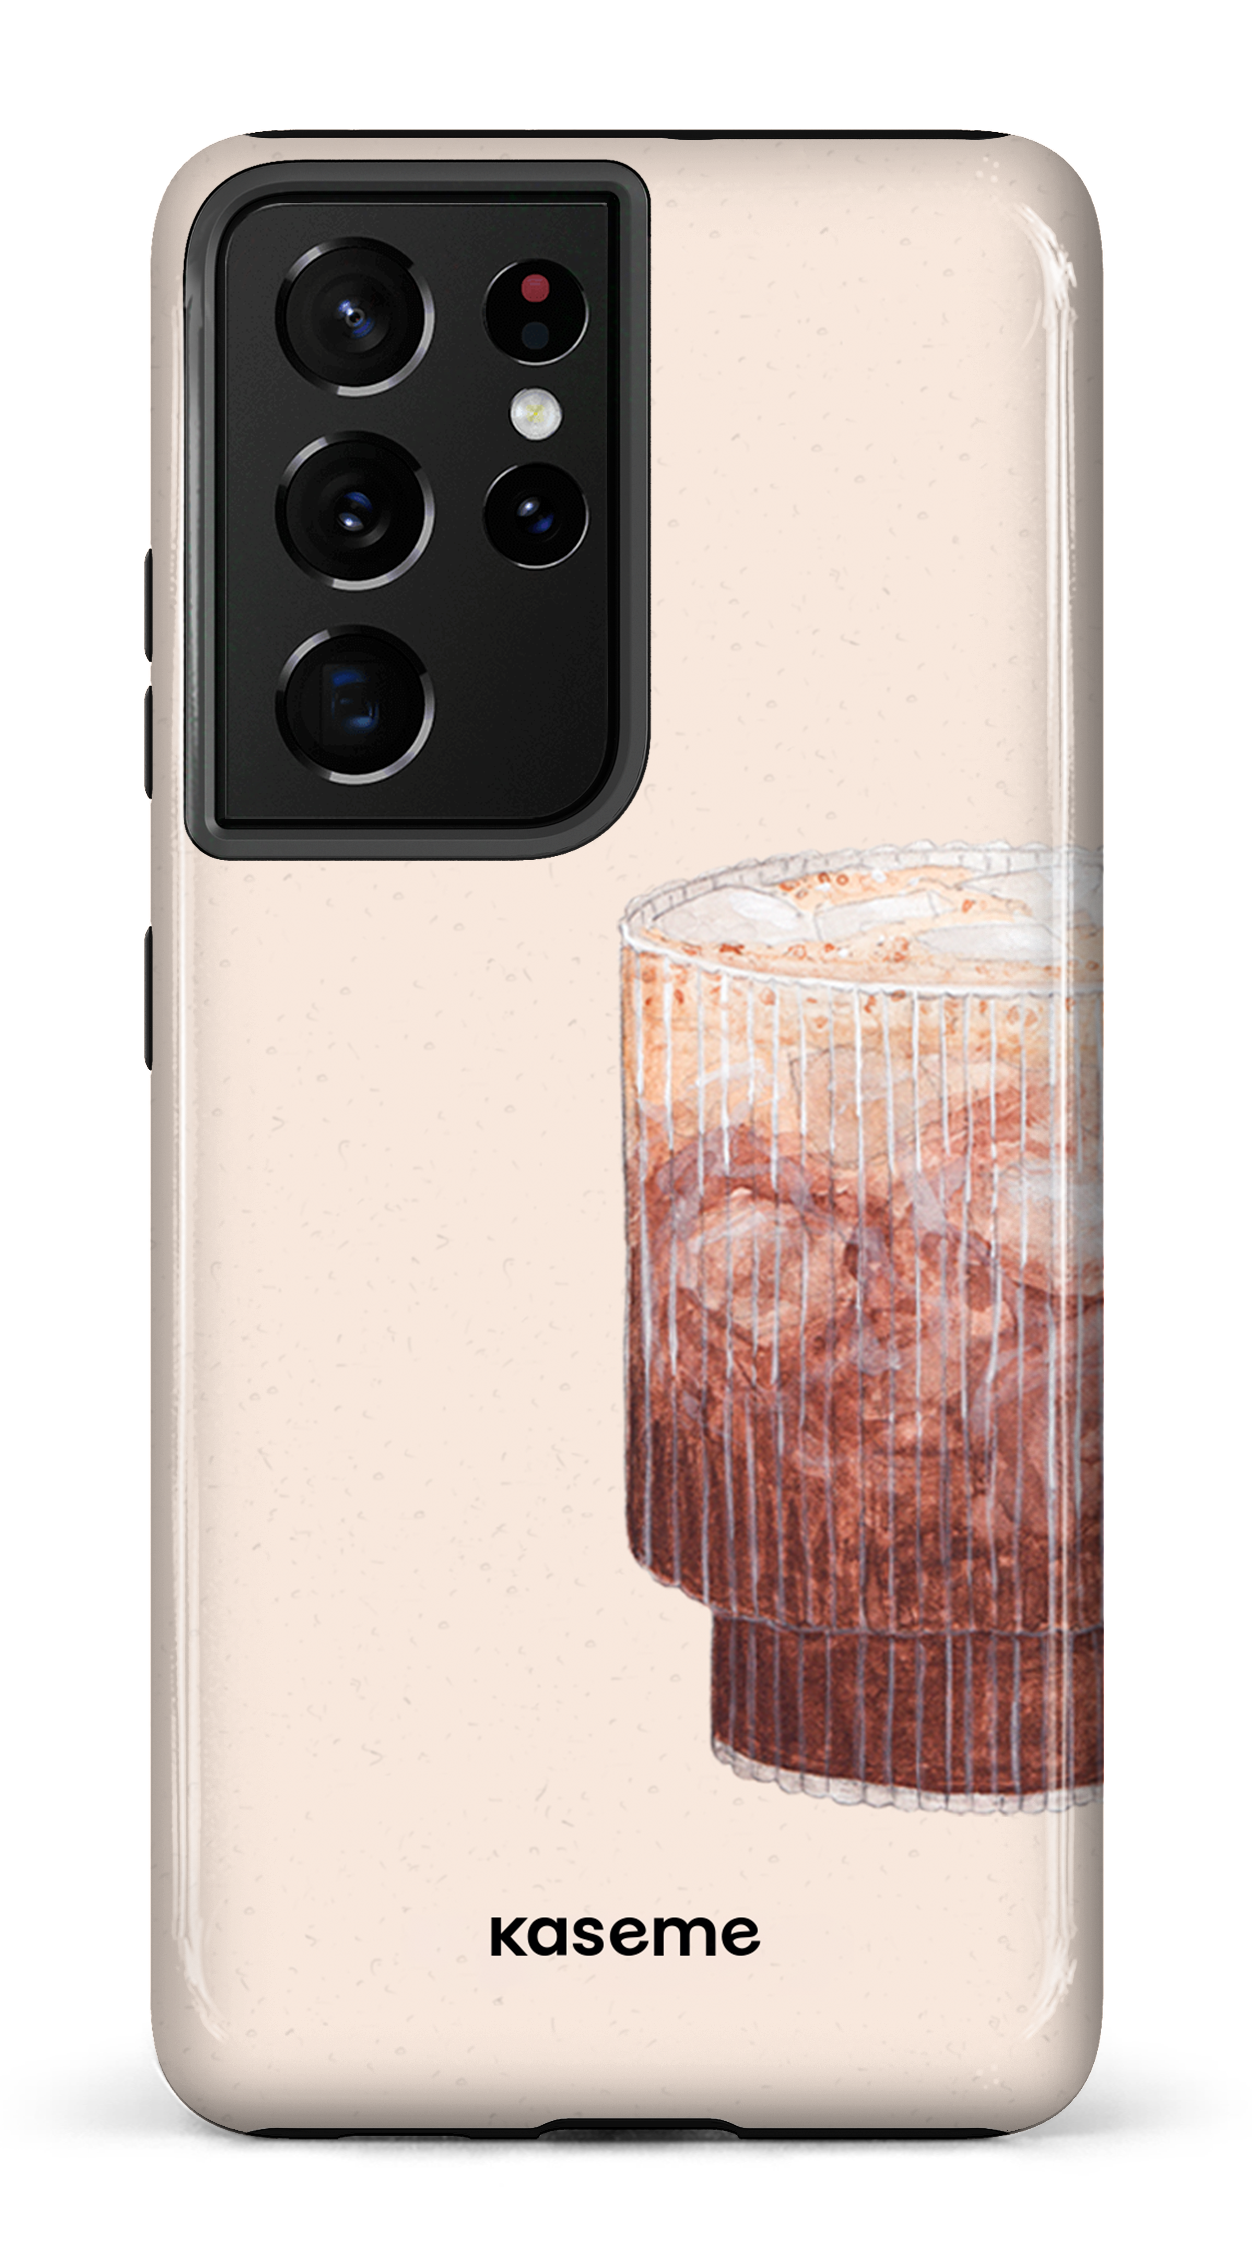 Ripple coffee - Galaxy S21 Ultra